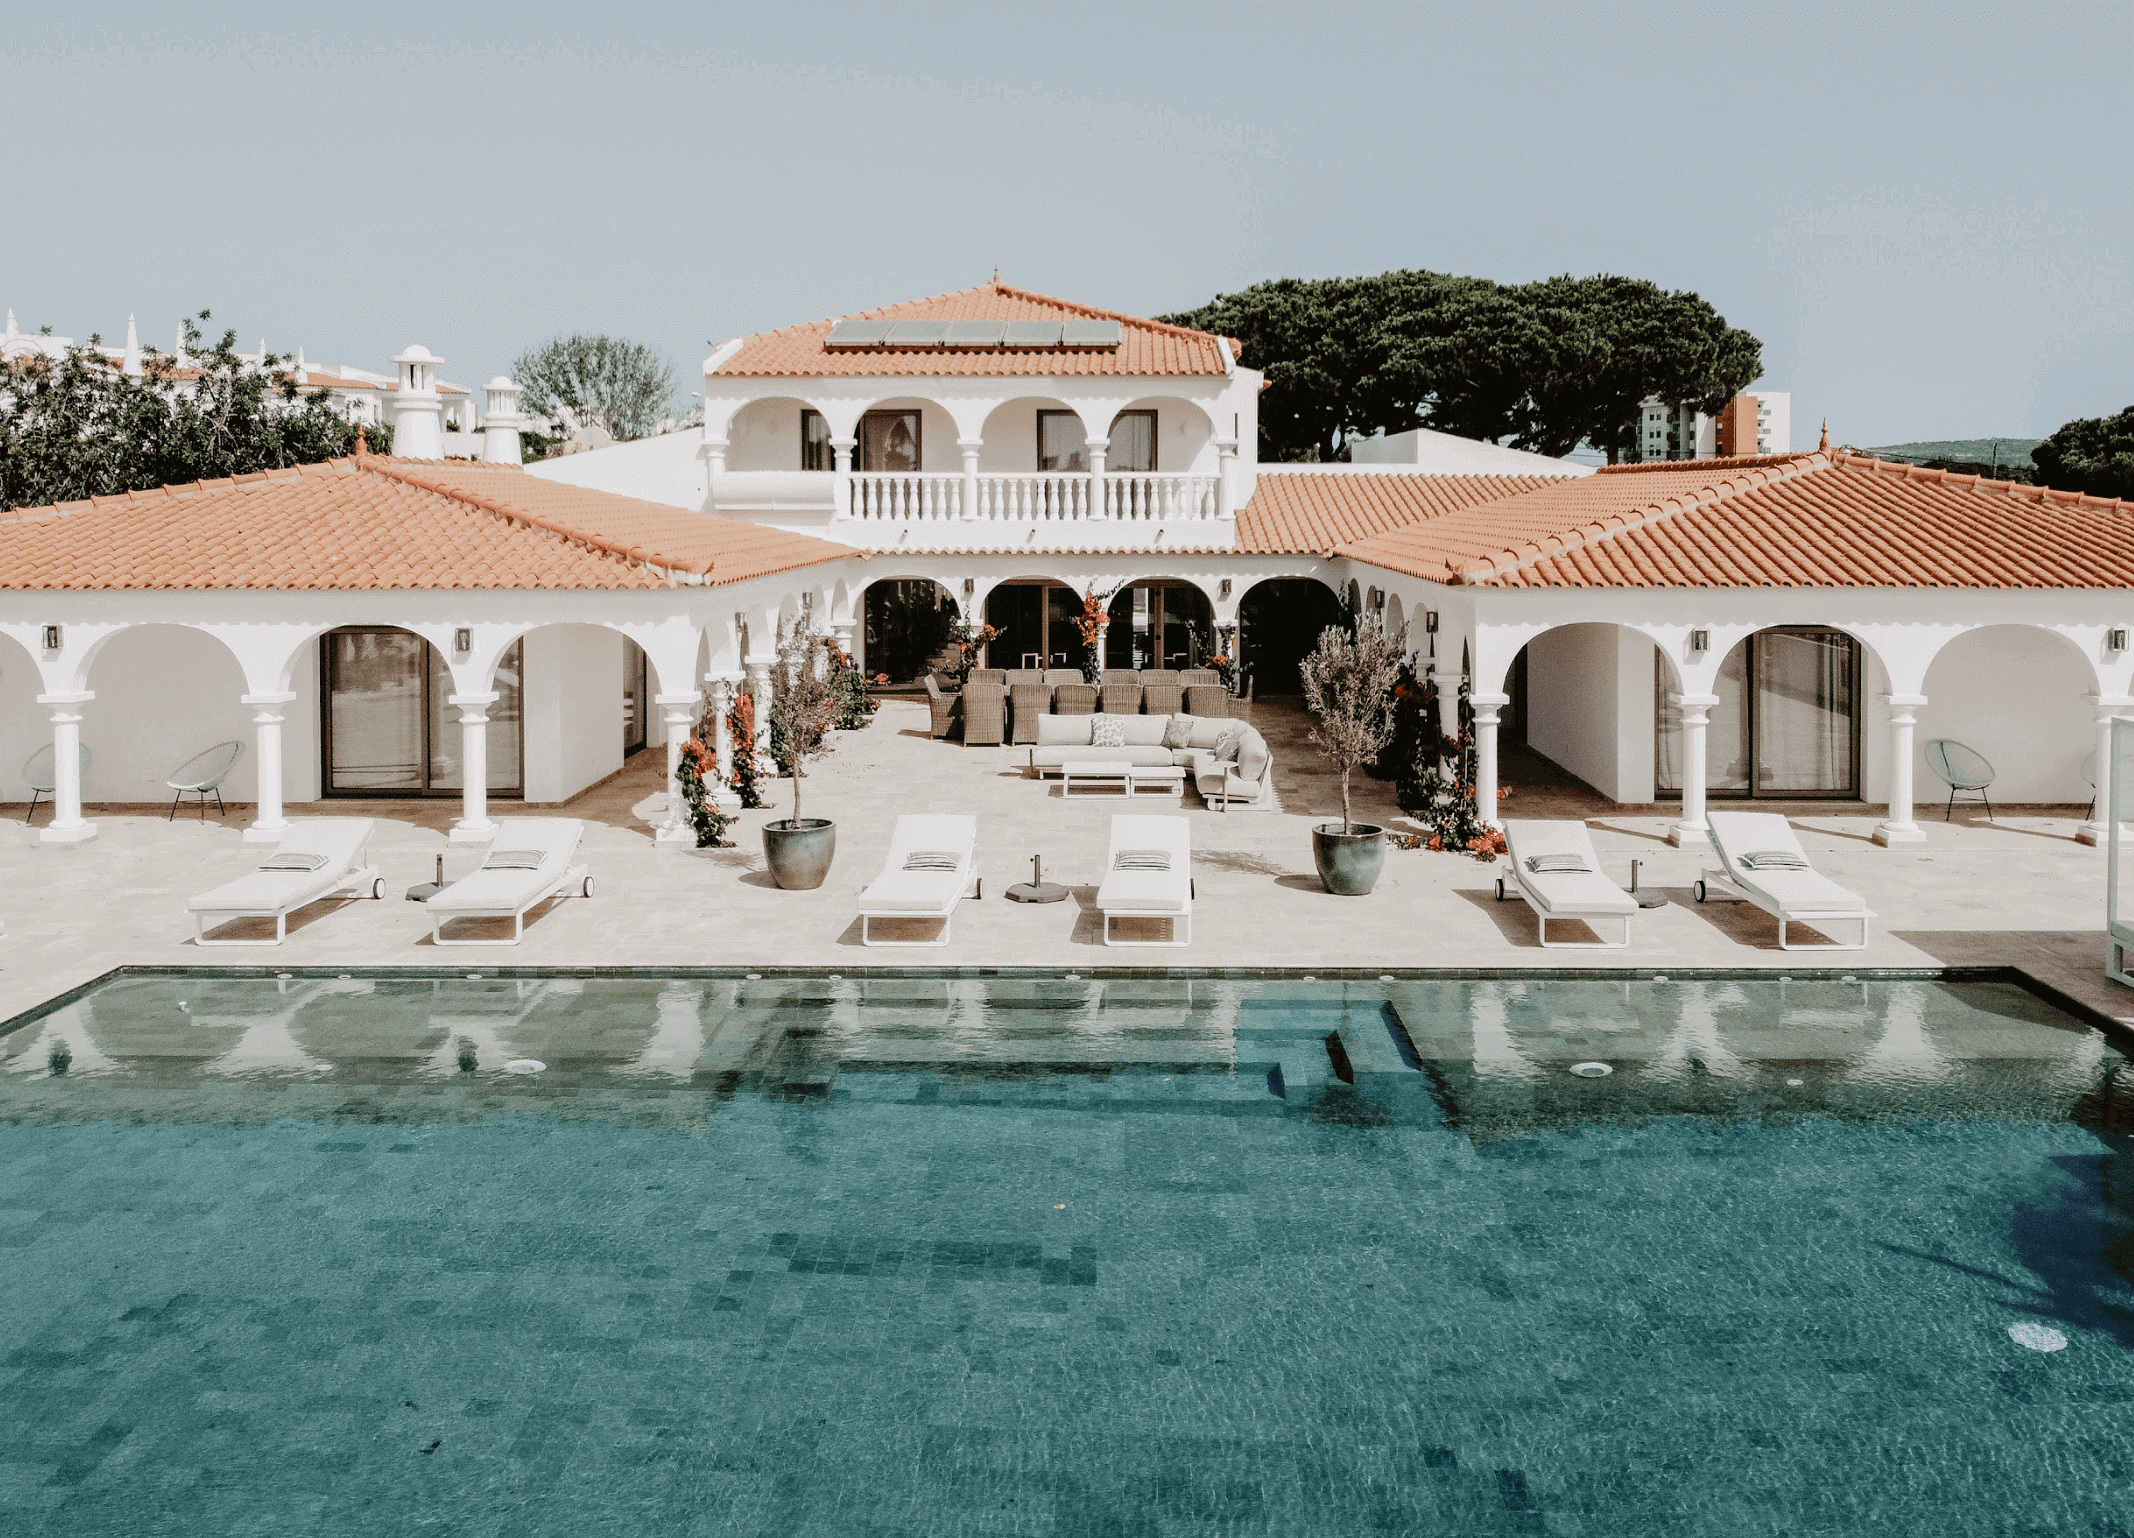 The villa's huge infinity pool